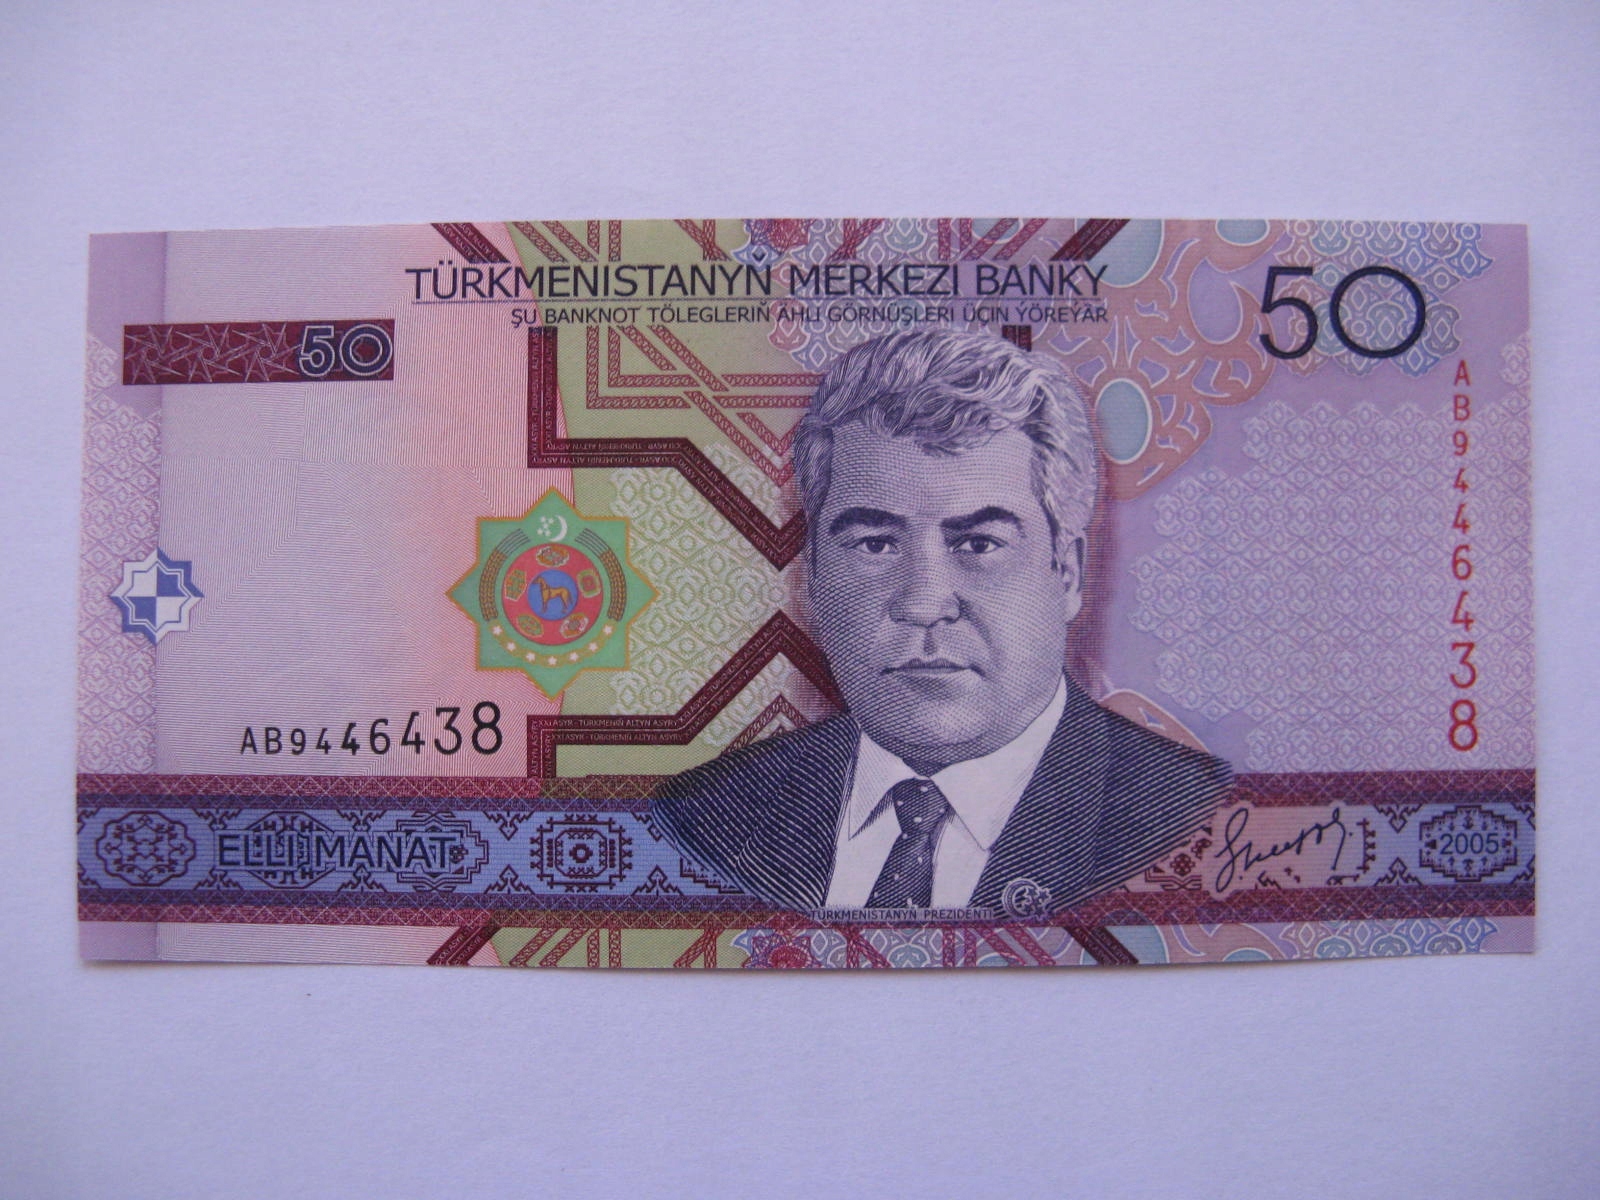 Манат рубил. 100 Манат Туркменистан. Купюра Туркменистана манат. Деньги Туркмении 100 манат. Туркменский манат купюры.